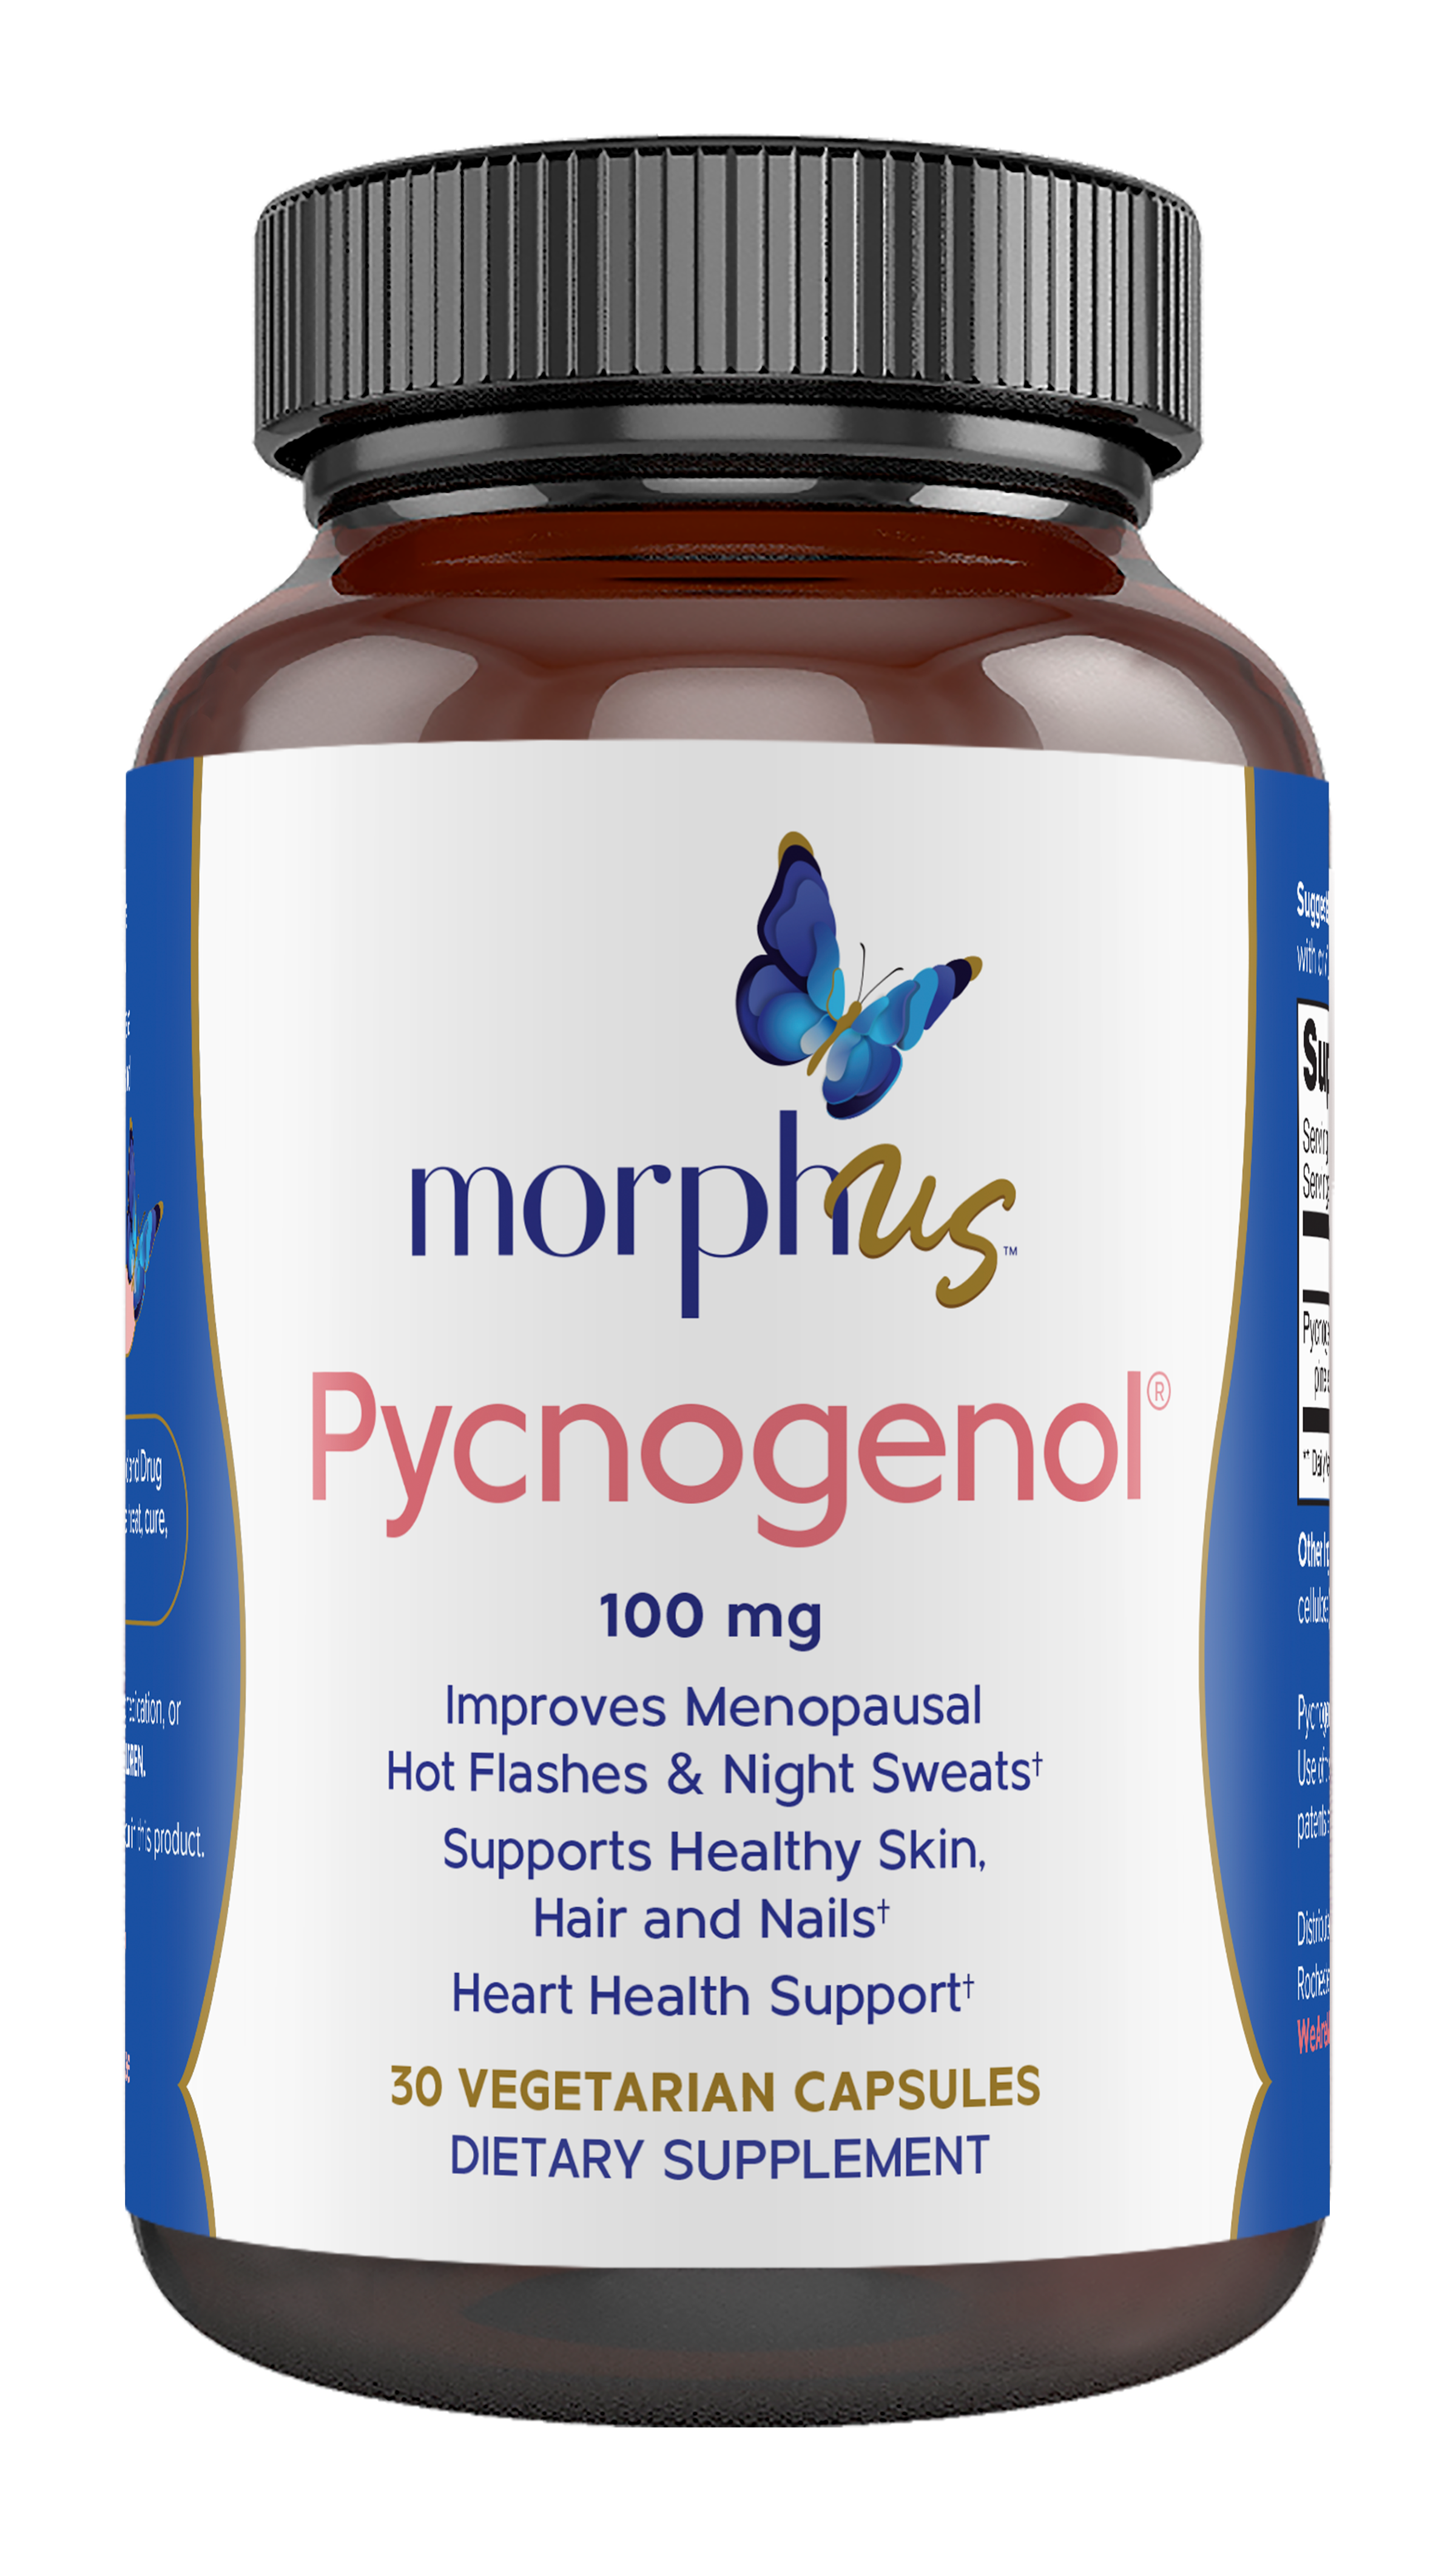 Pycnogenol and liver health